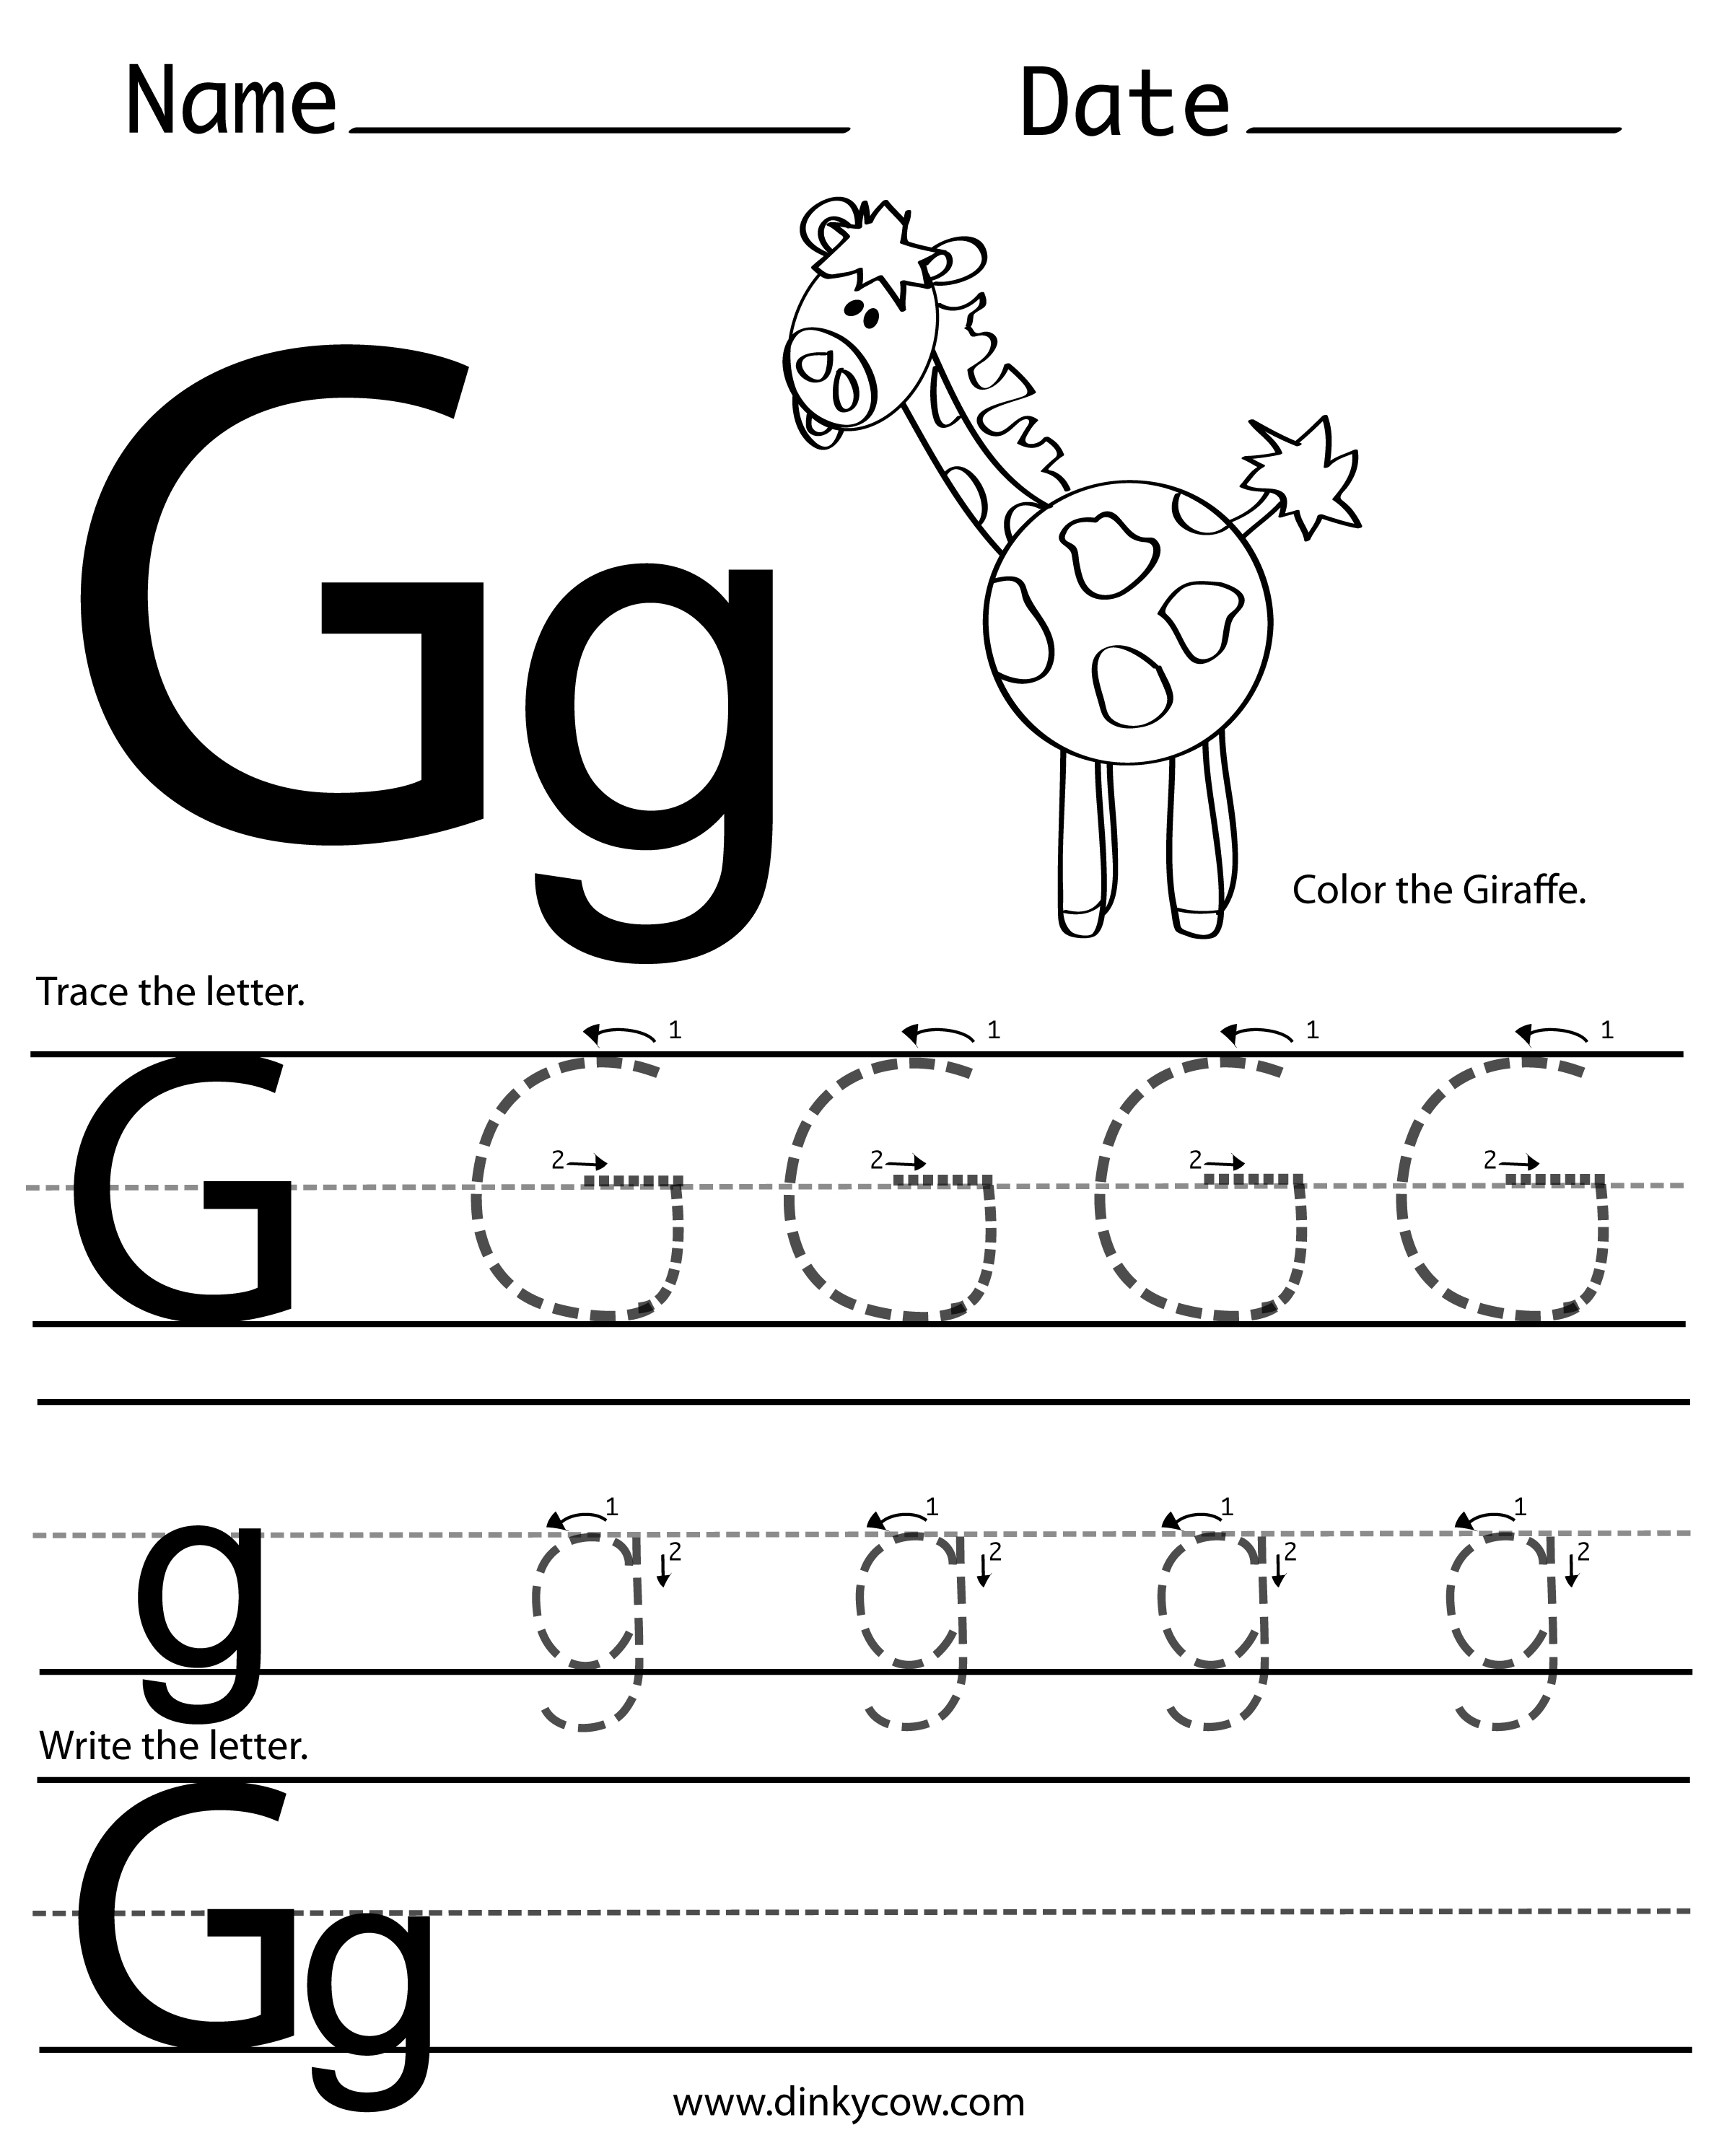 printable letter g worksheets for Early education : letter g worksheets coloring free download